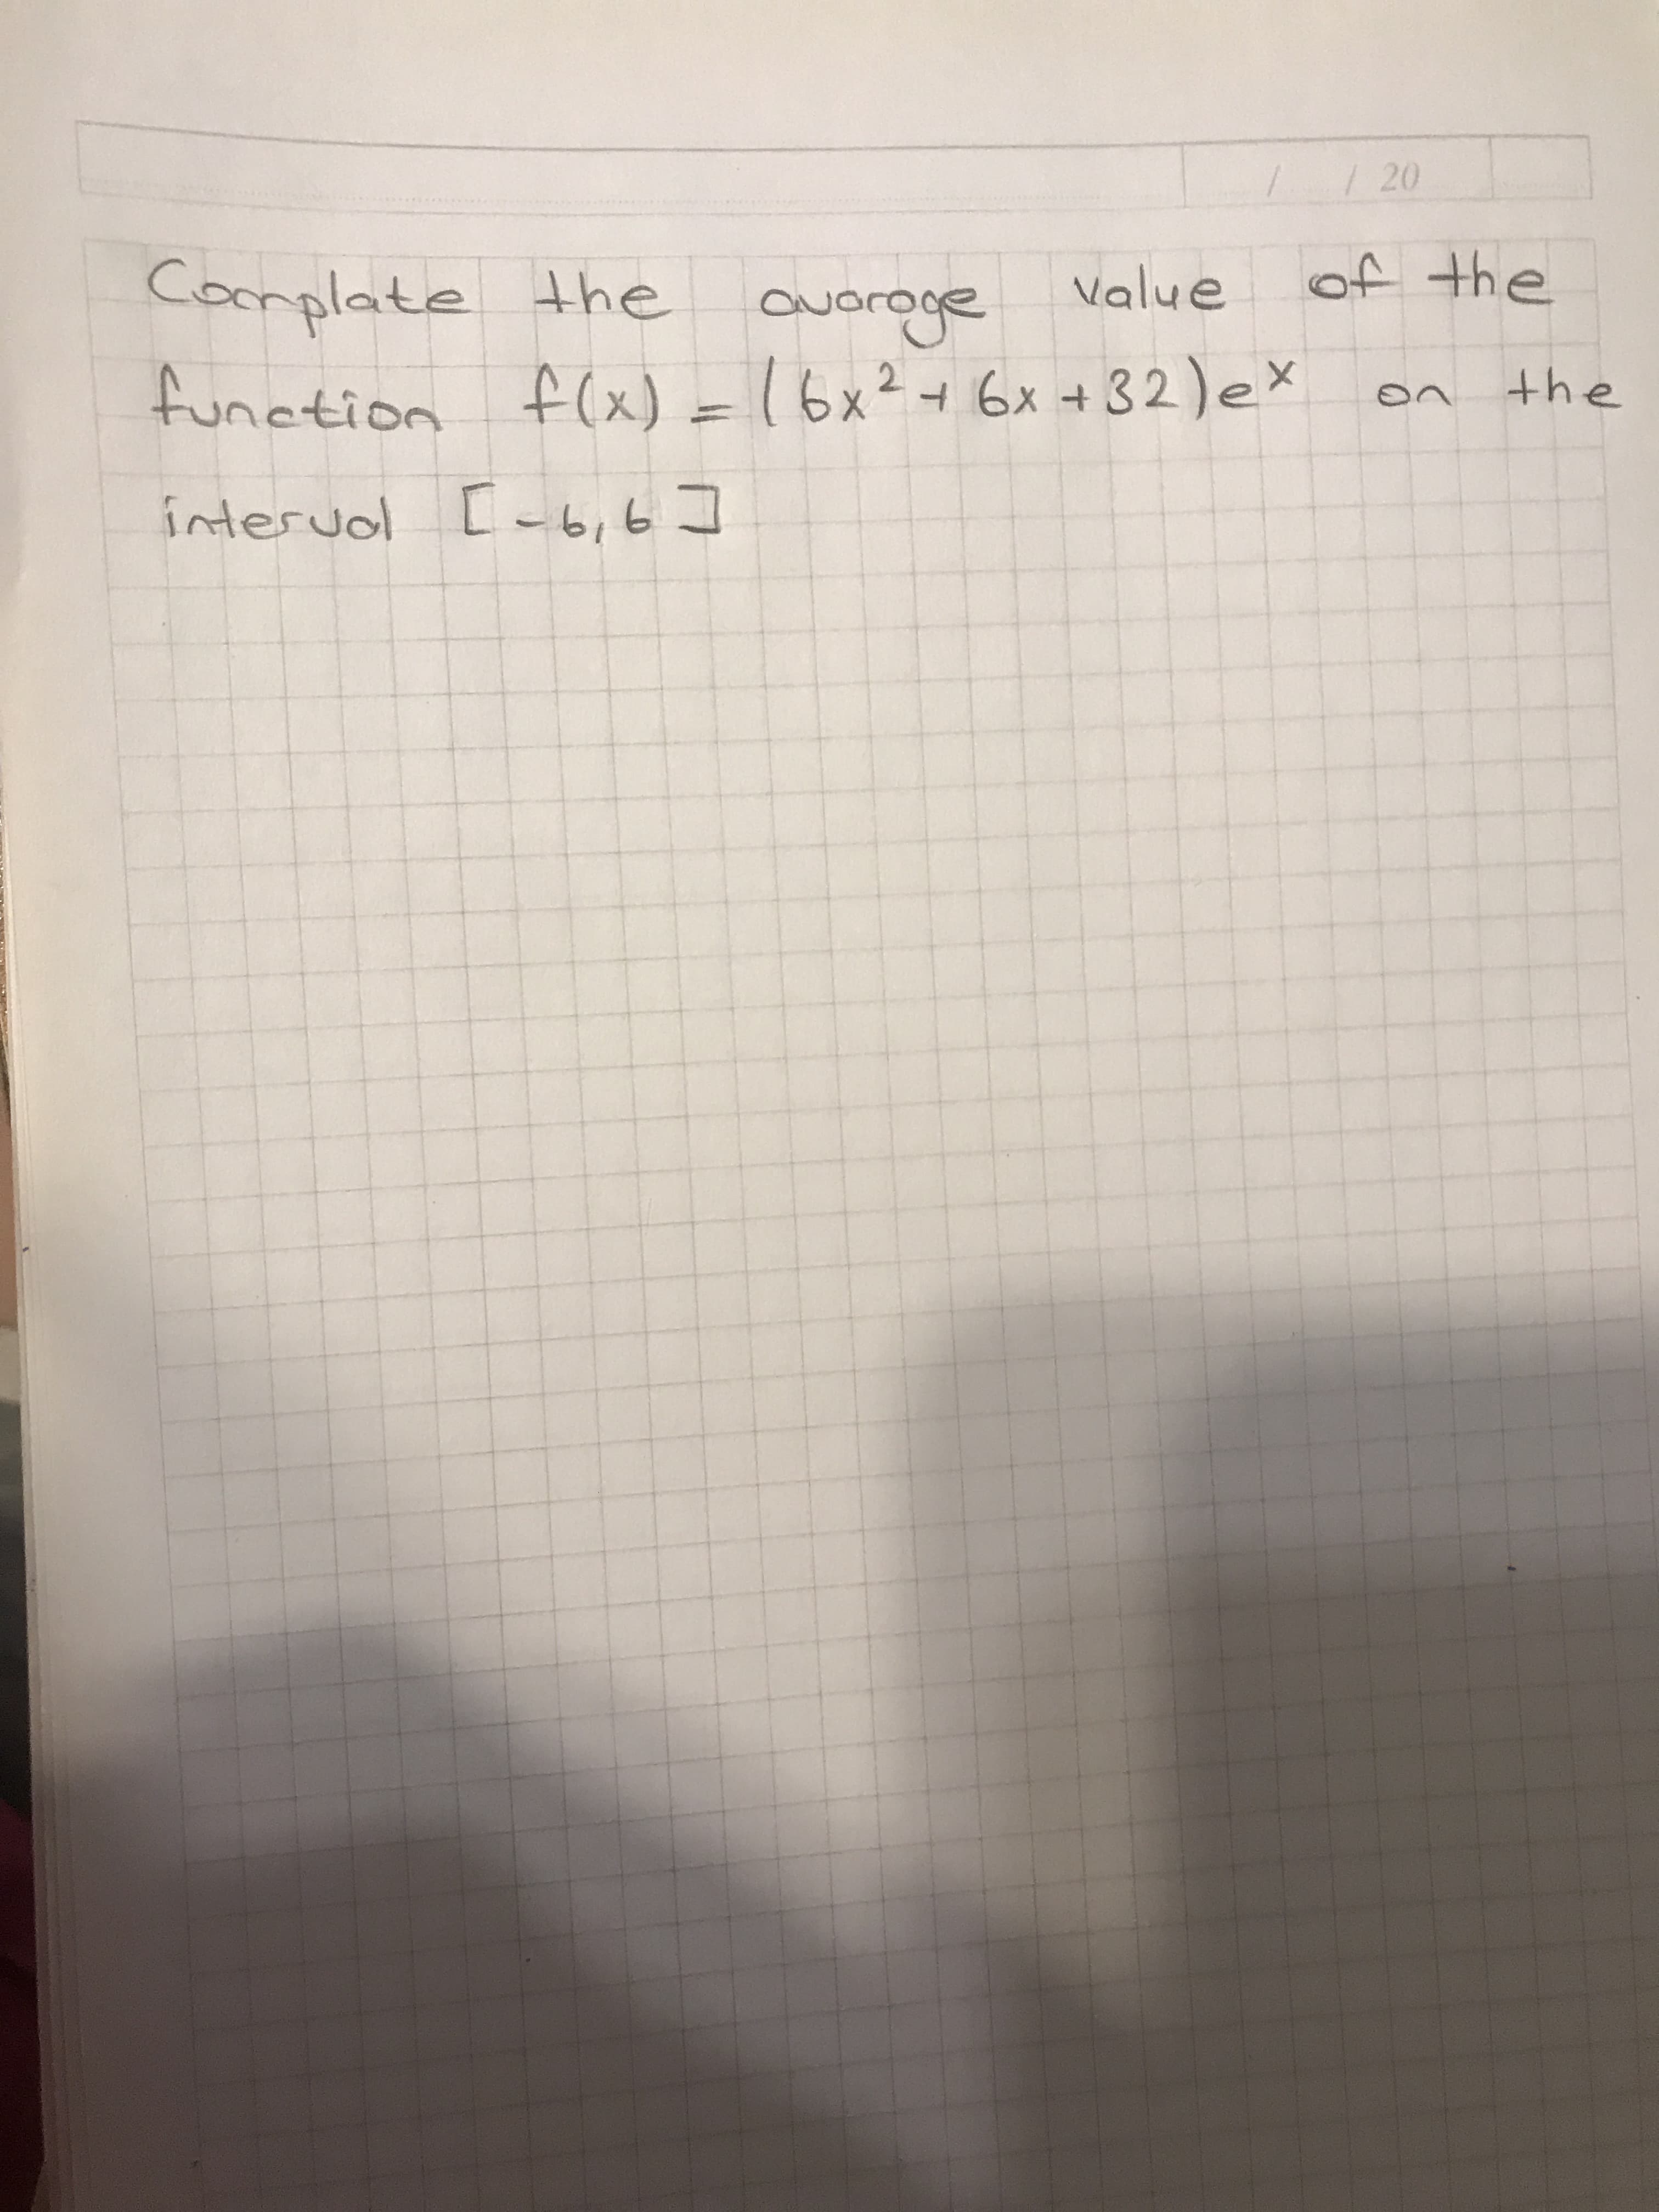 of the
Complate the ovoroge
funetion flx) -16x2+6x+32)ex
value
f(x) =16x²+ 6x +32)ex
the
intervol L-bi6d
